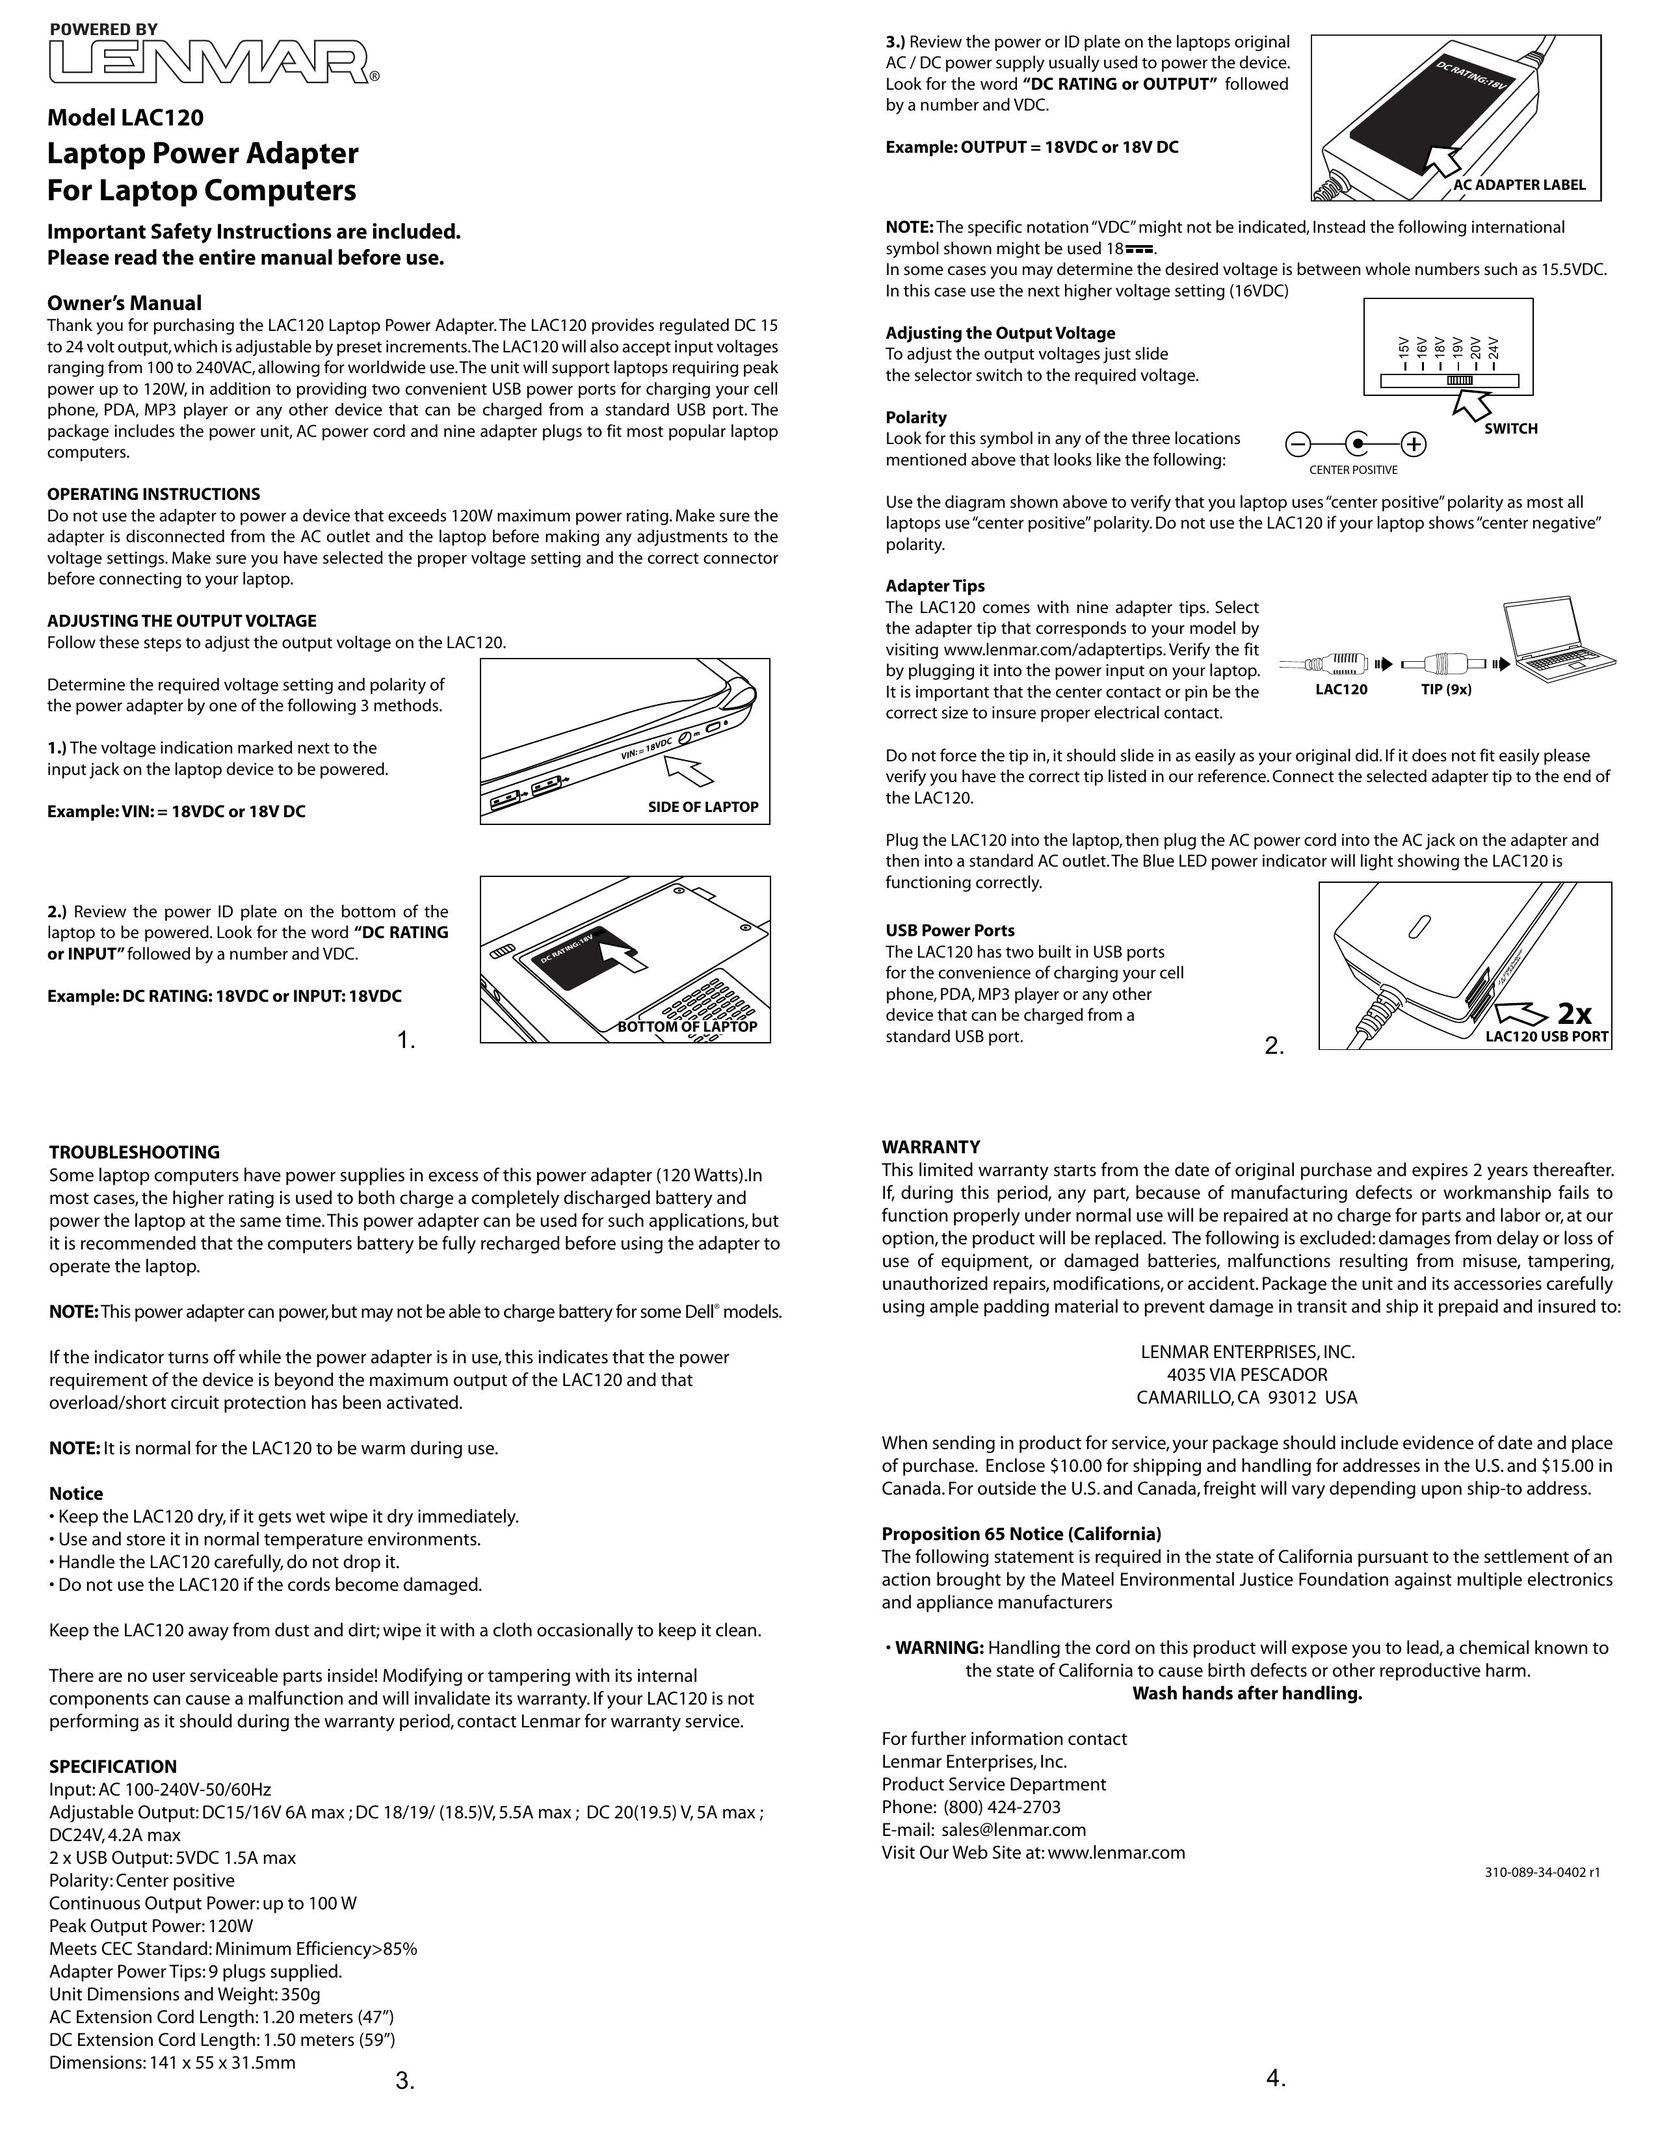 Lenmar Enterprises LAC120 Computer Accessories User Manual